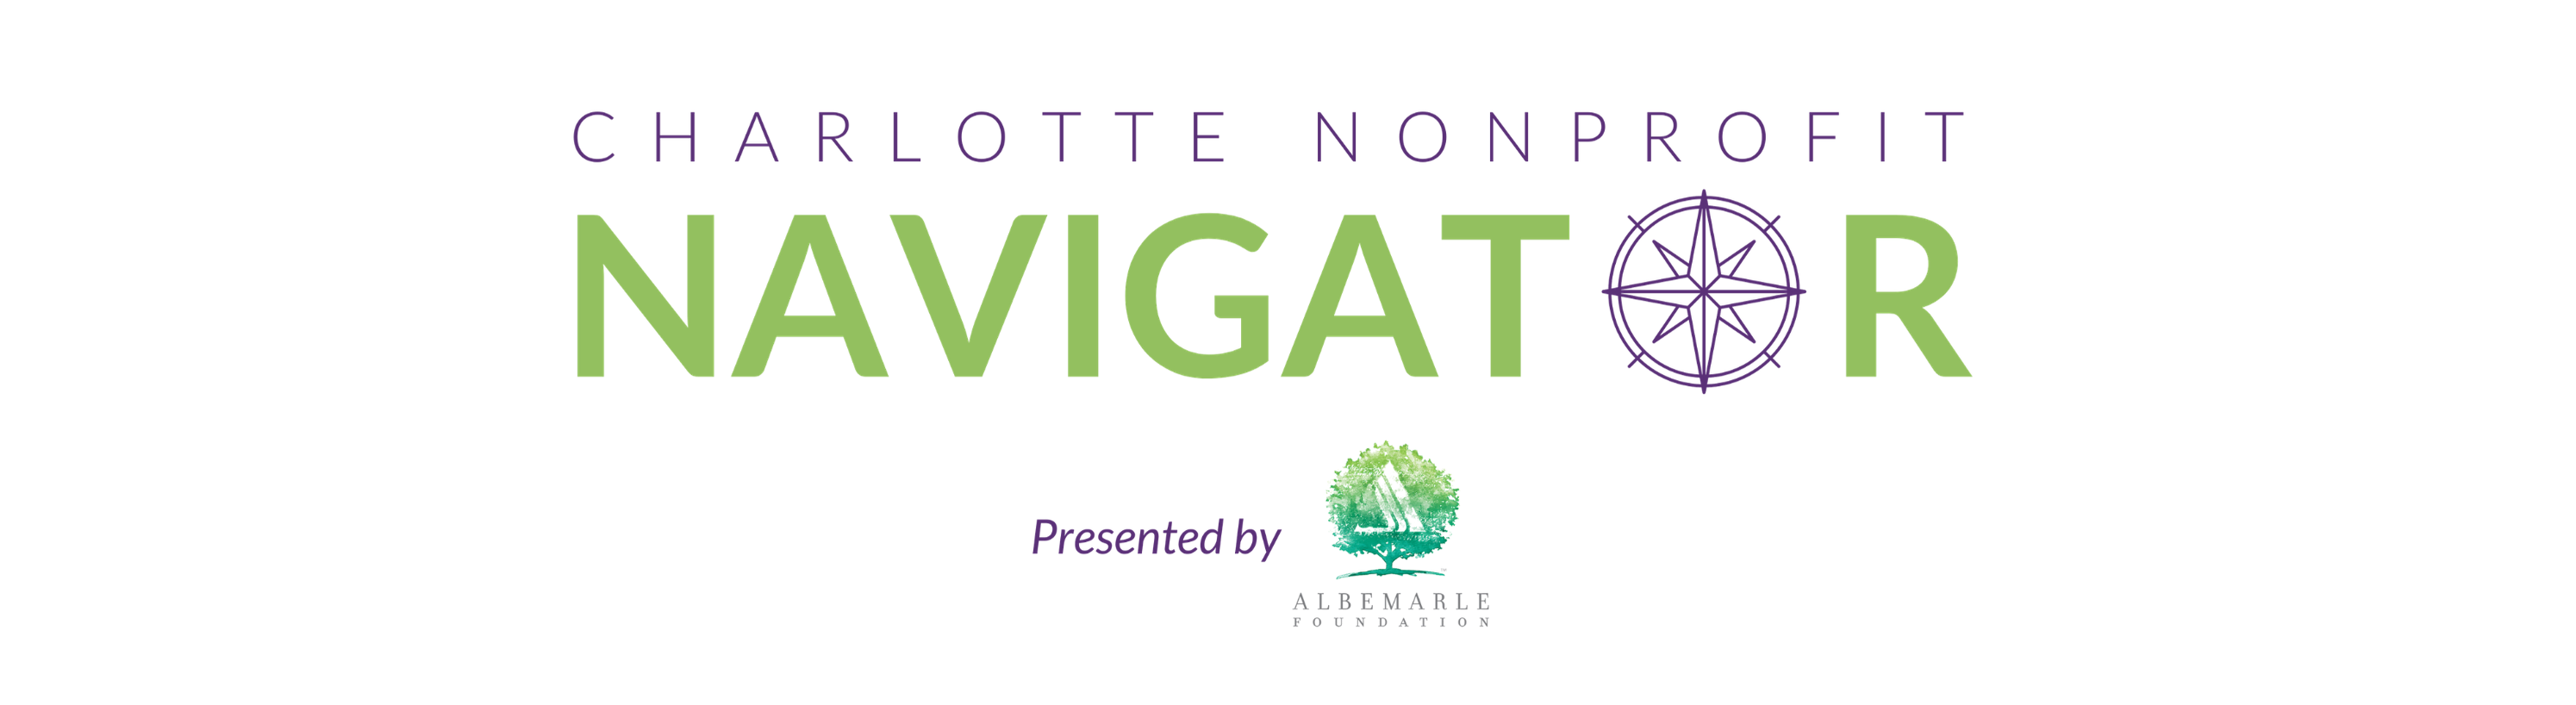 Charlotte Nonprofit Navigator, presented by Albemarle Foundation